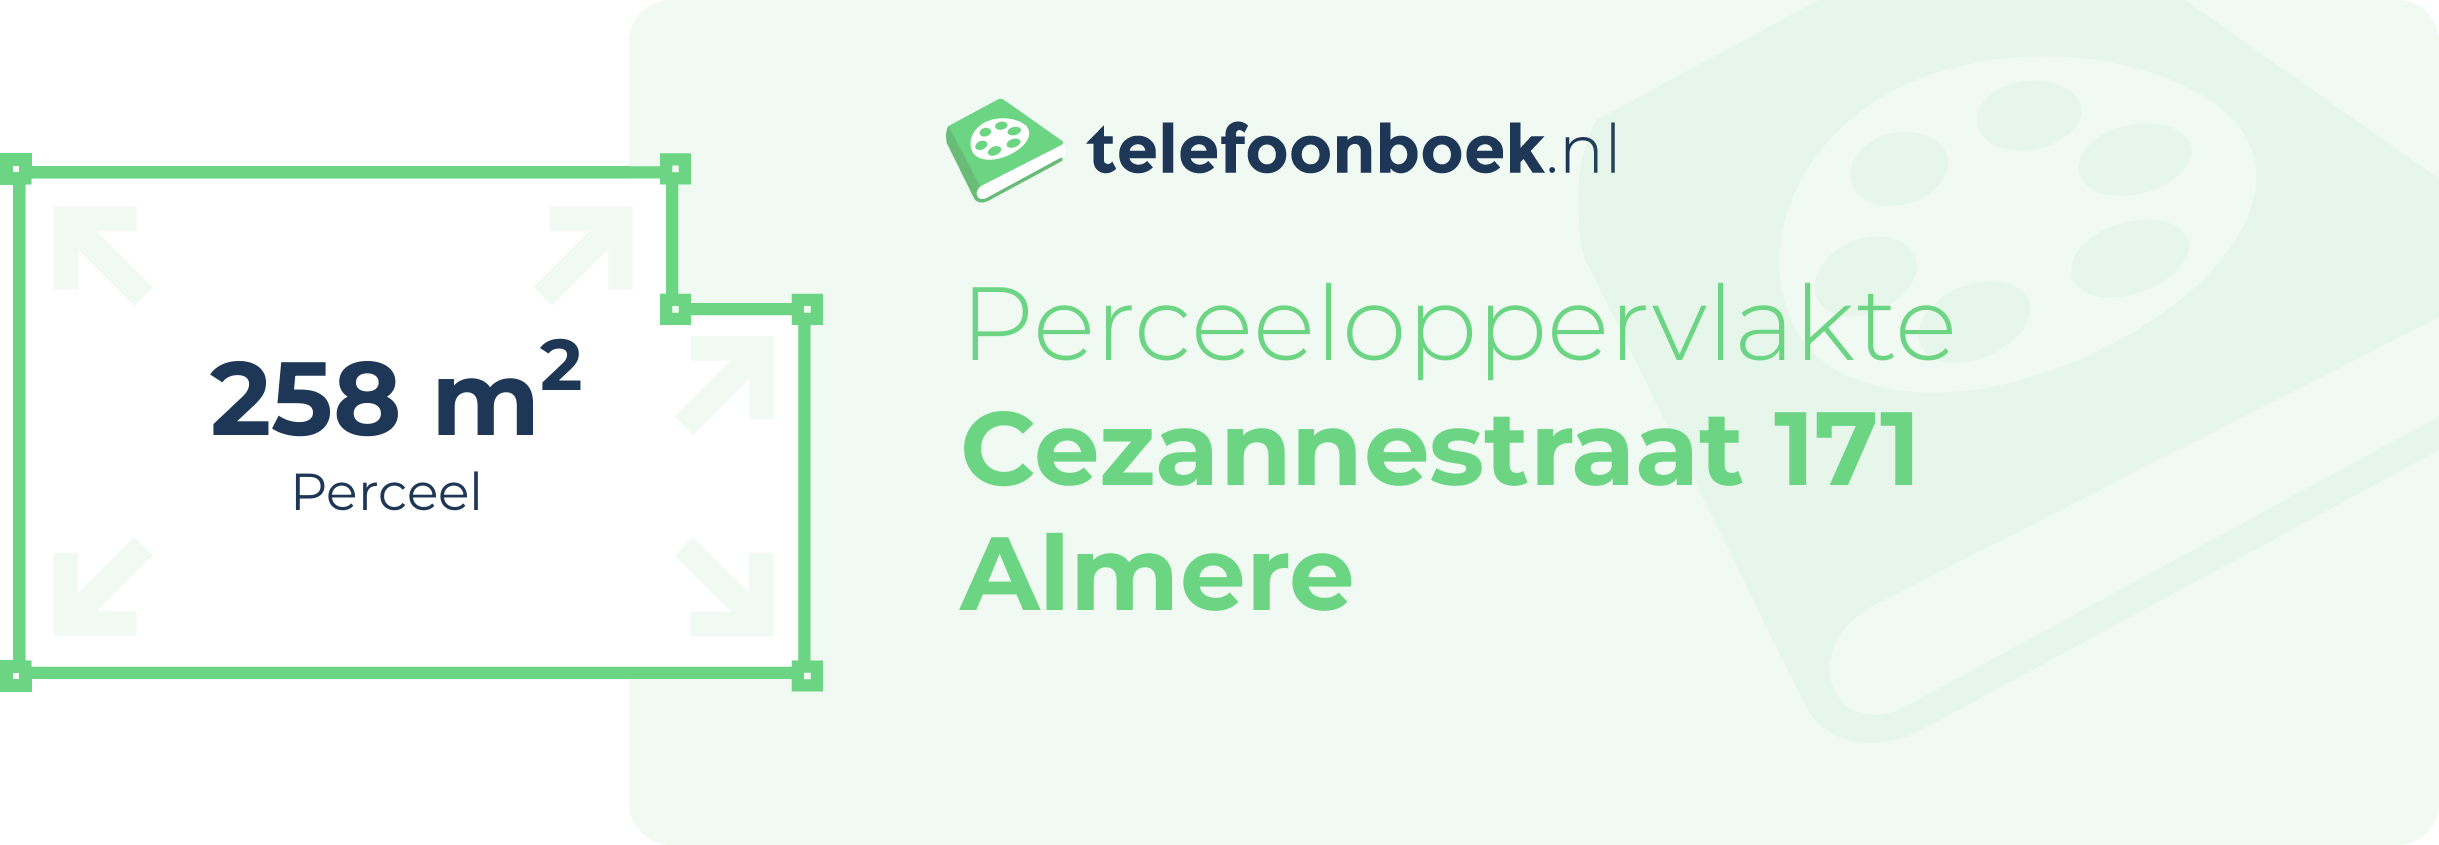 Perceeloppervlakte Cezannestraat 171 Almere